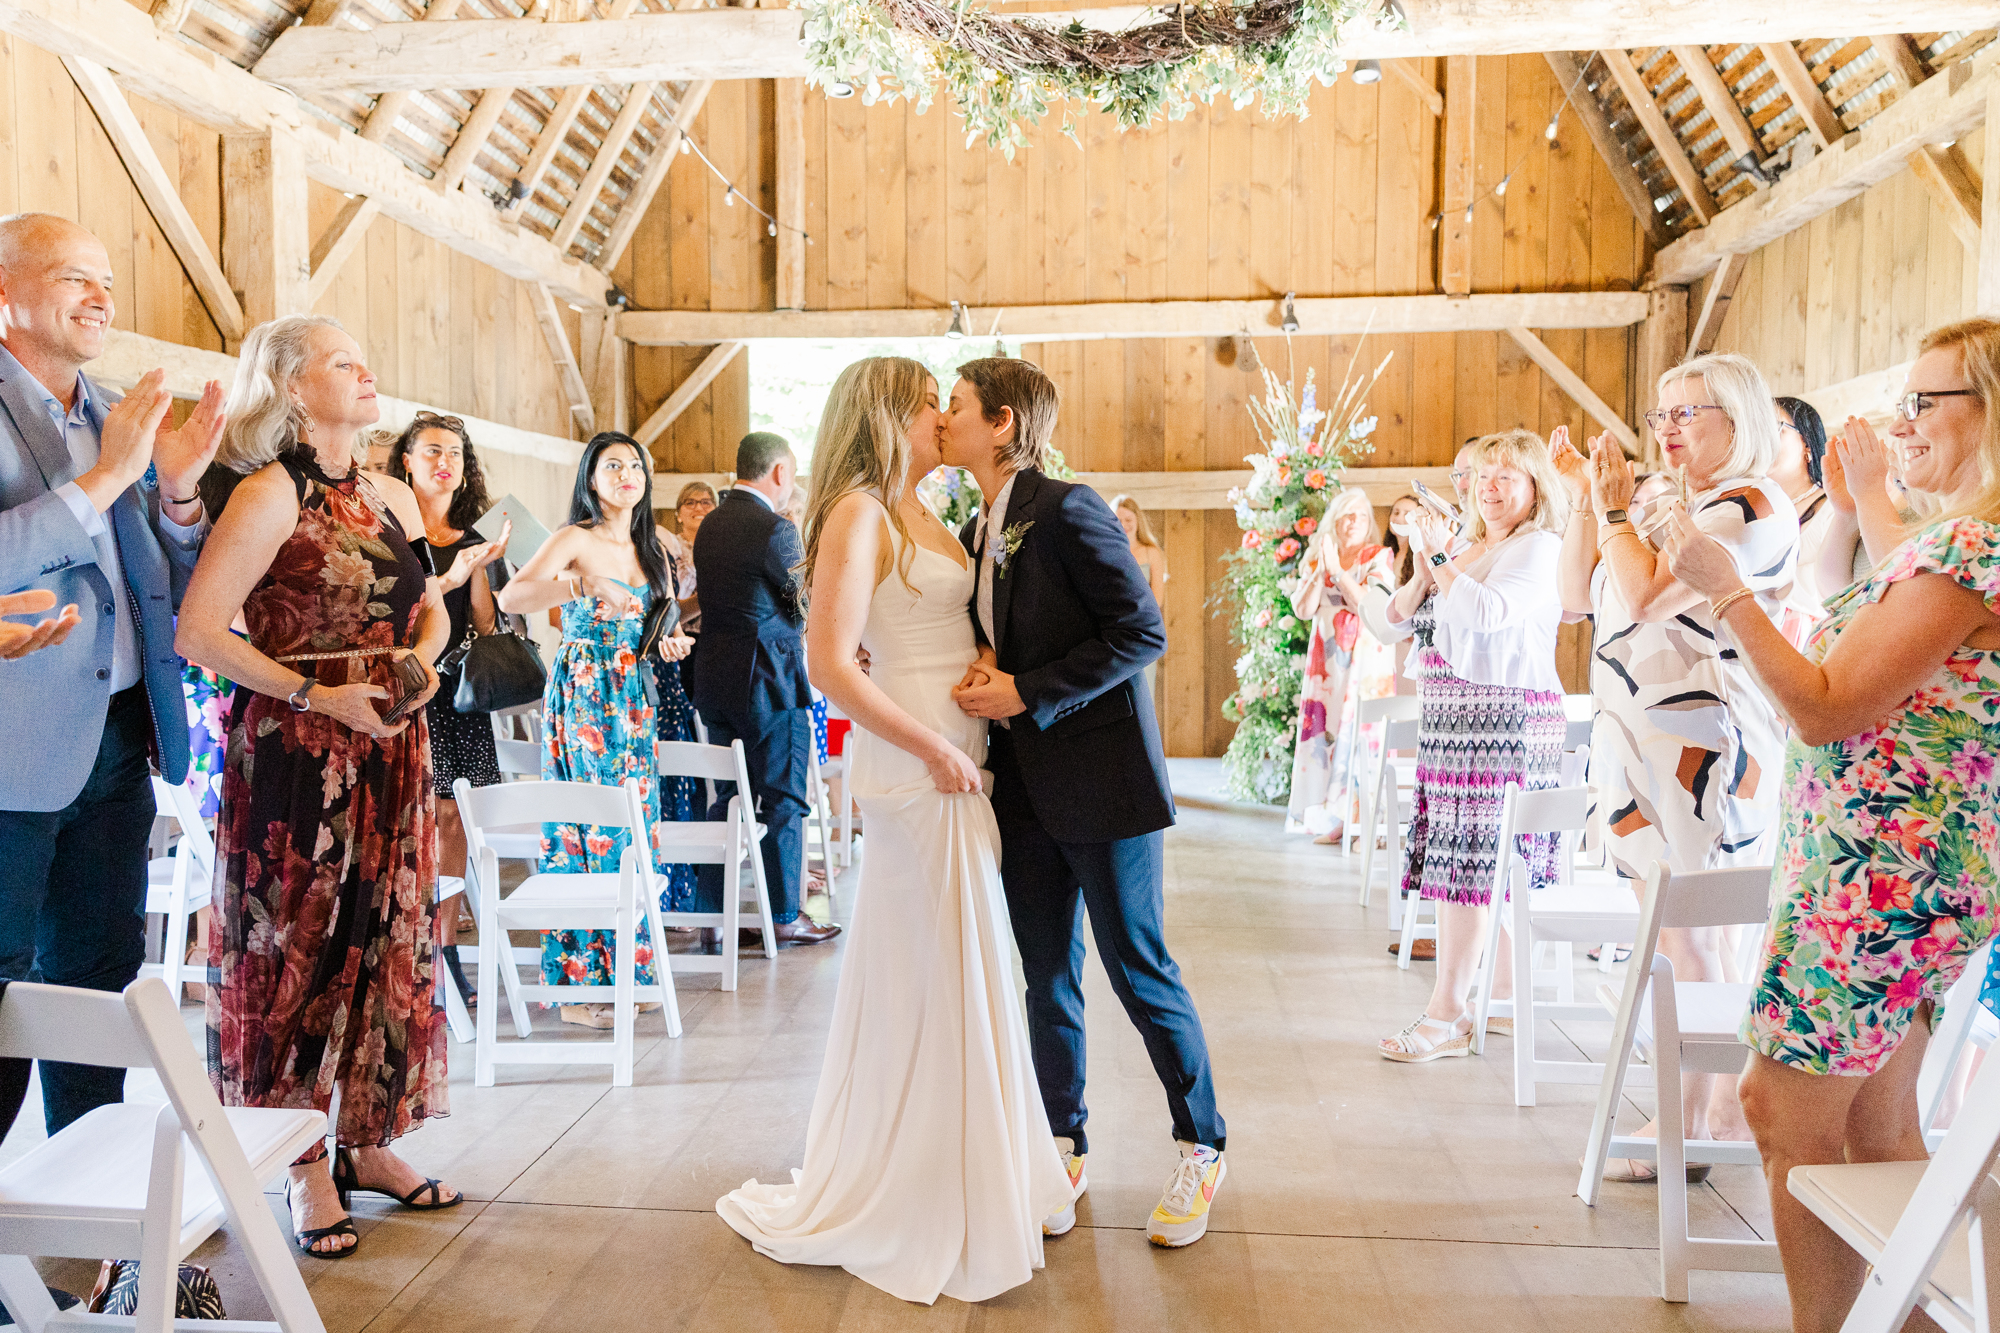 Stunning Maple Meadows Farm Wedding in Ontario, Canada